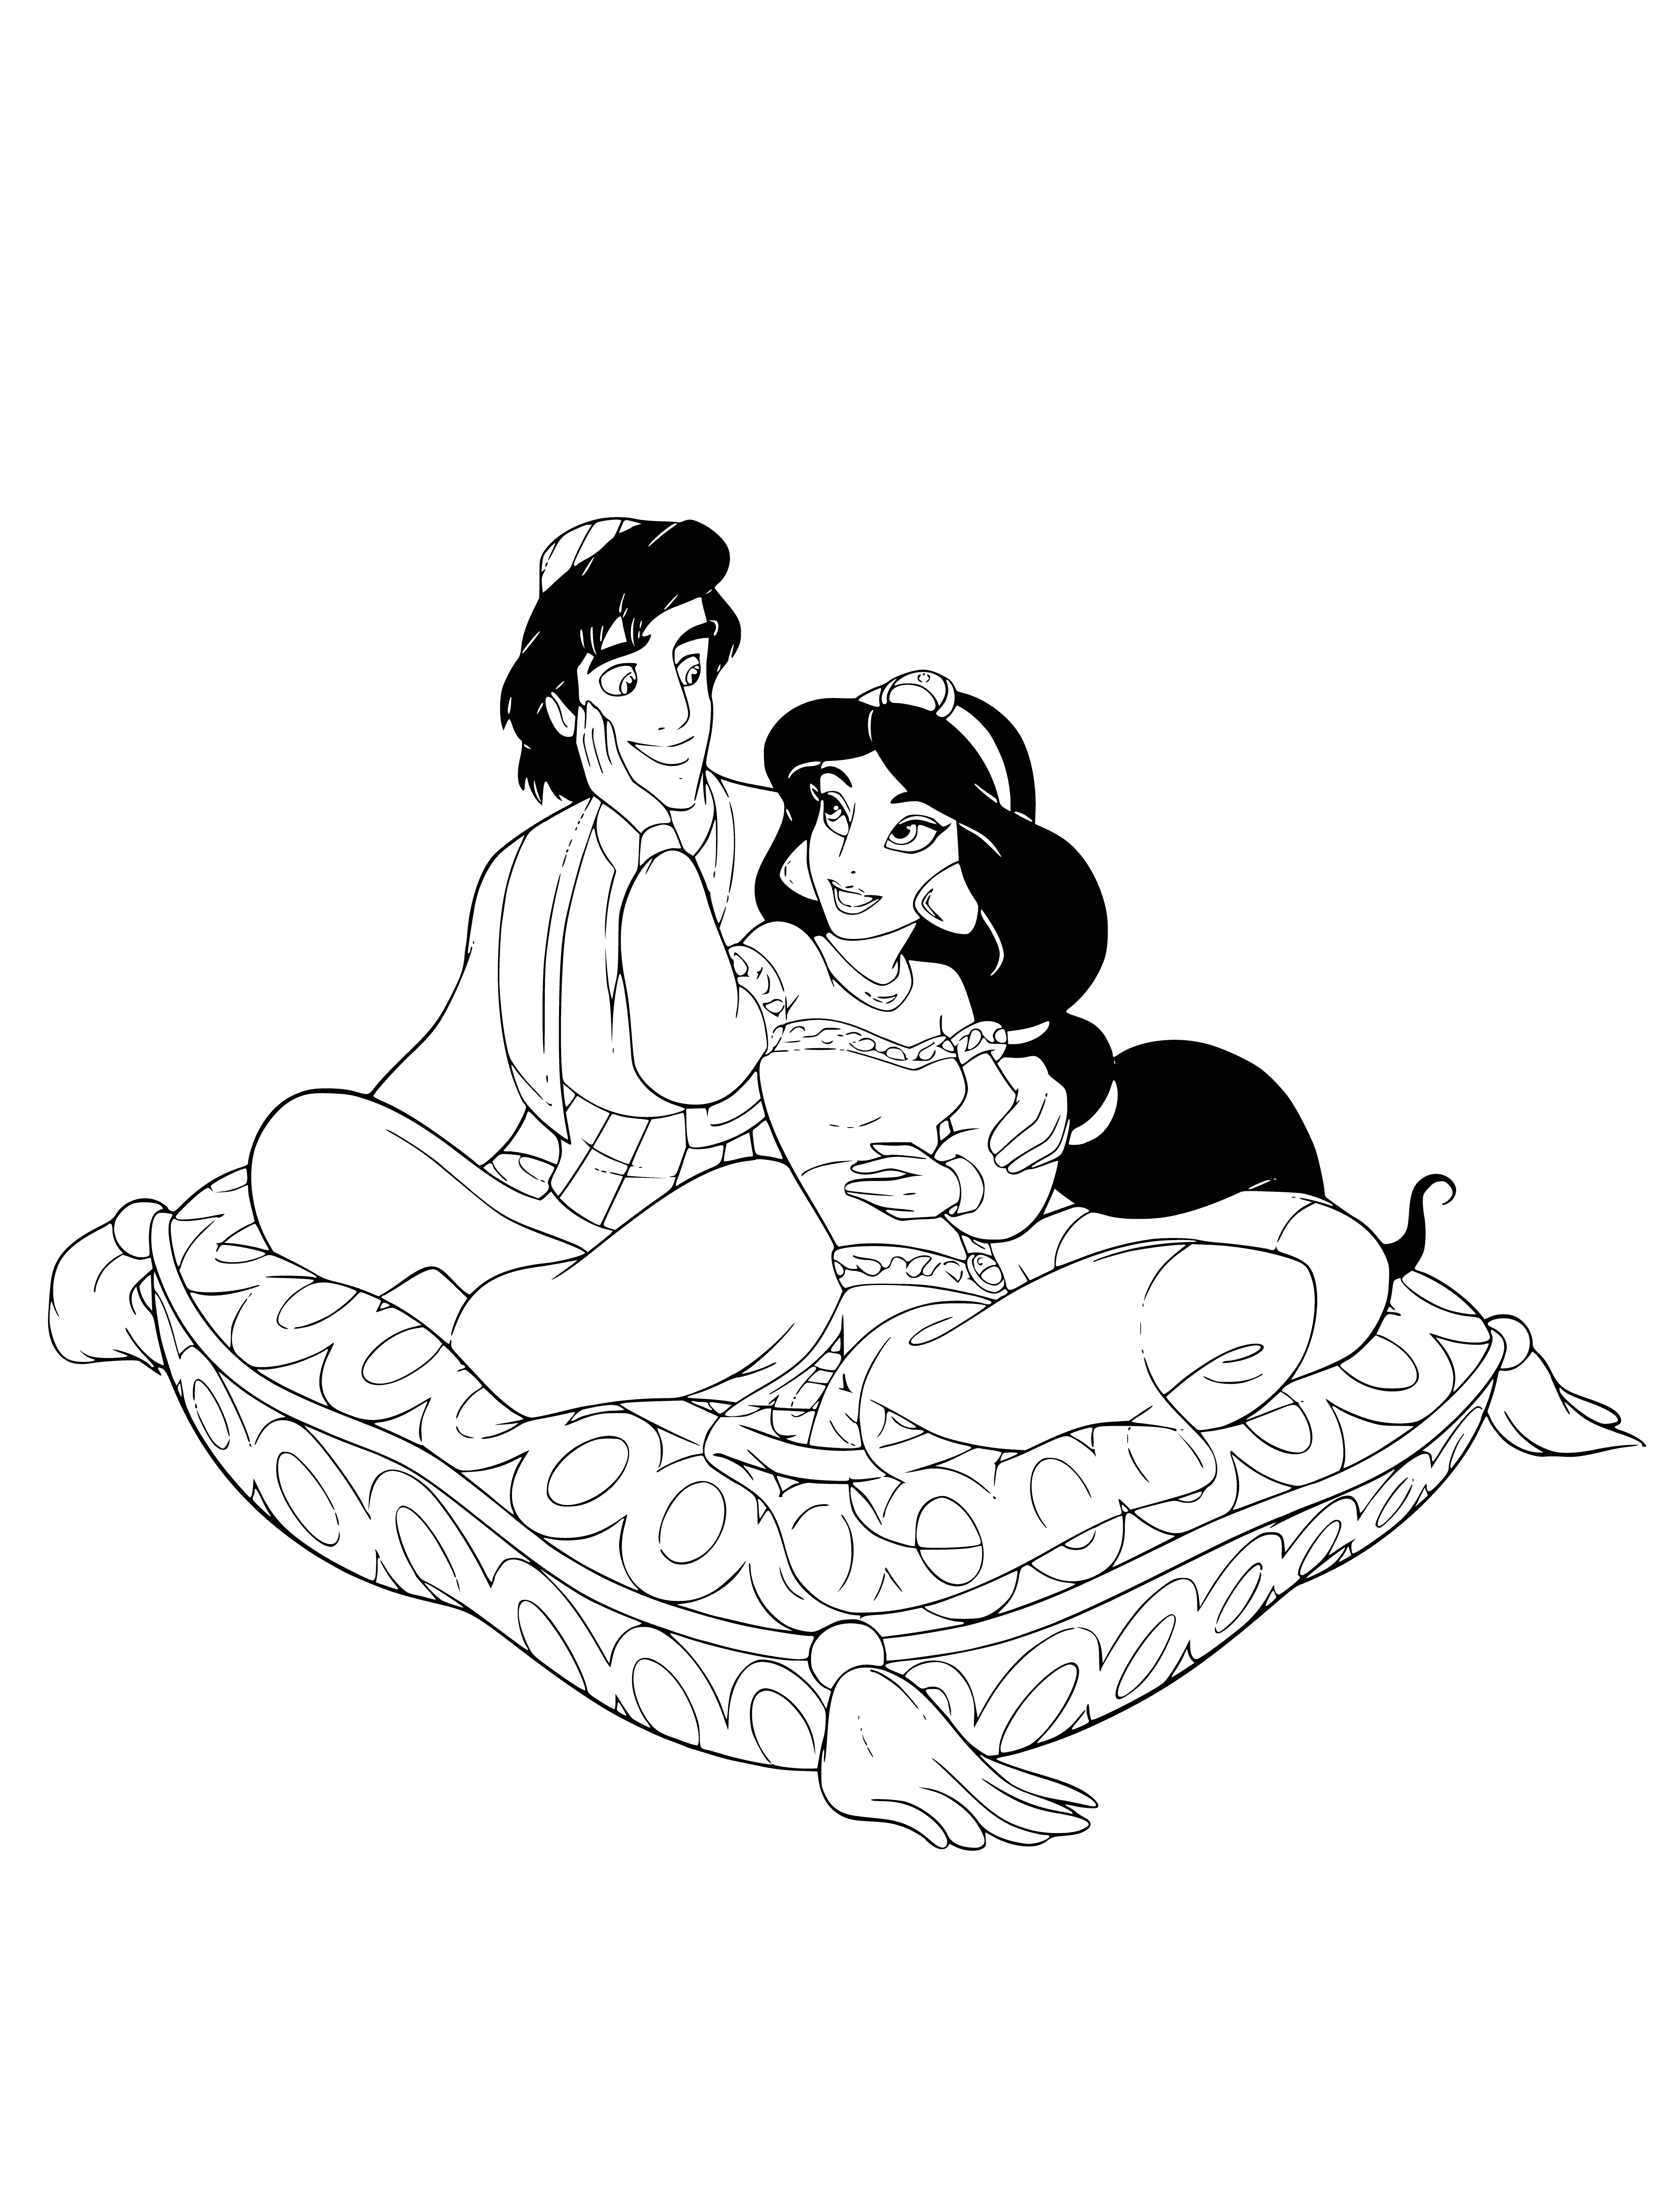 Aladdin and Princess Jasmine coloring page